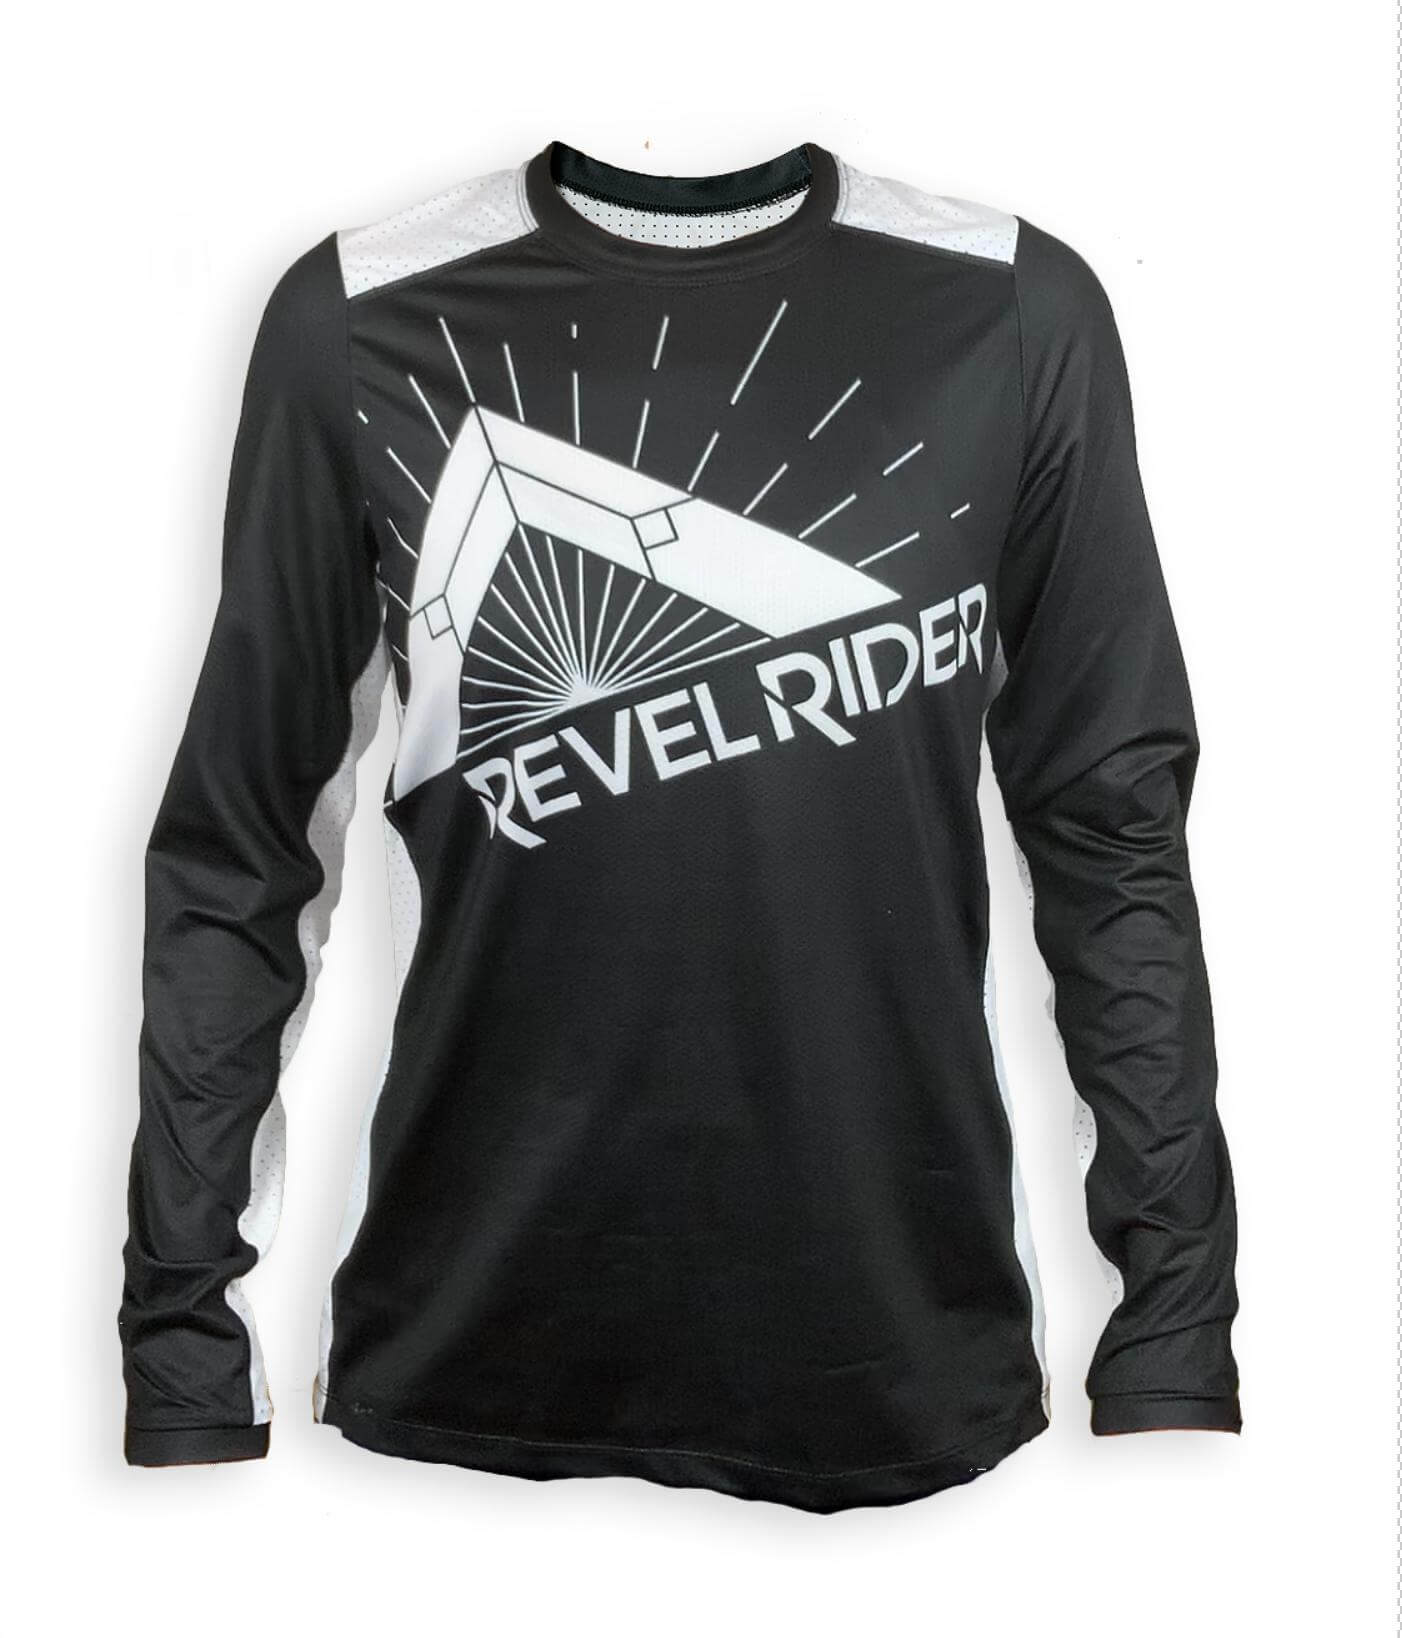 FLOW 2.0 Pant | Revel Rider Women\'s MTB Clothing